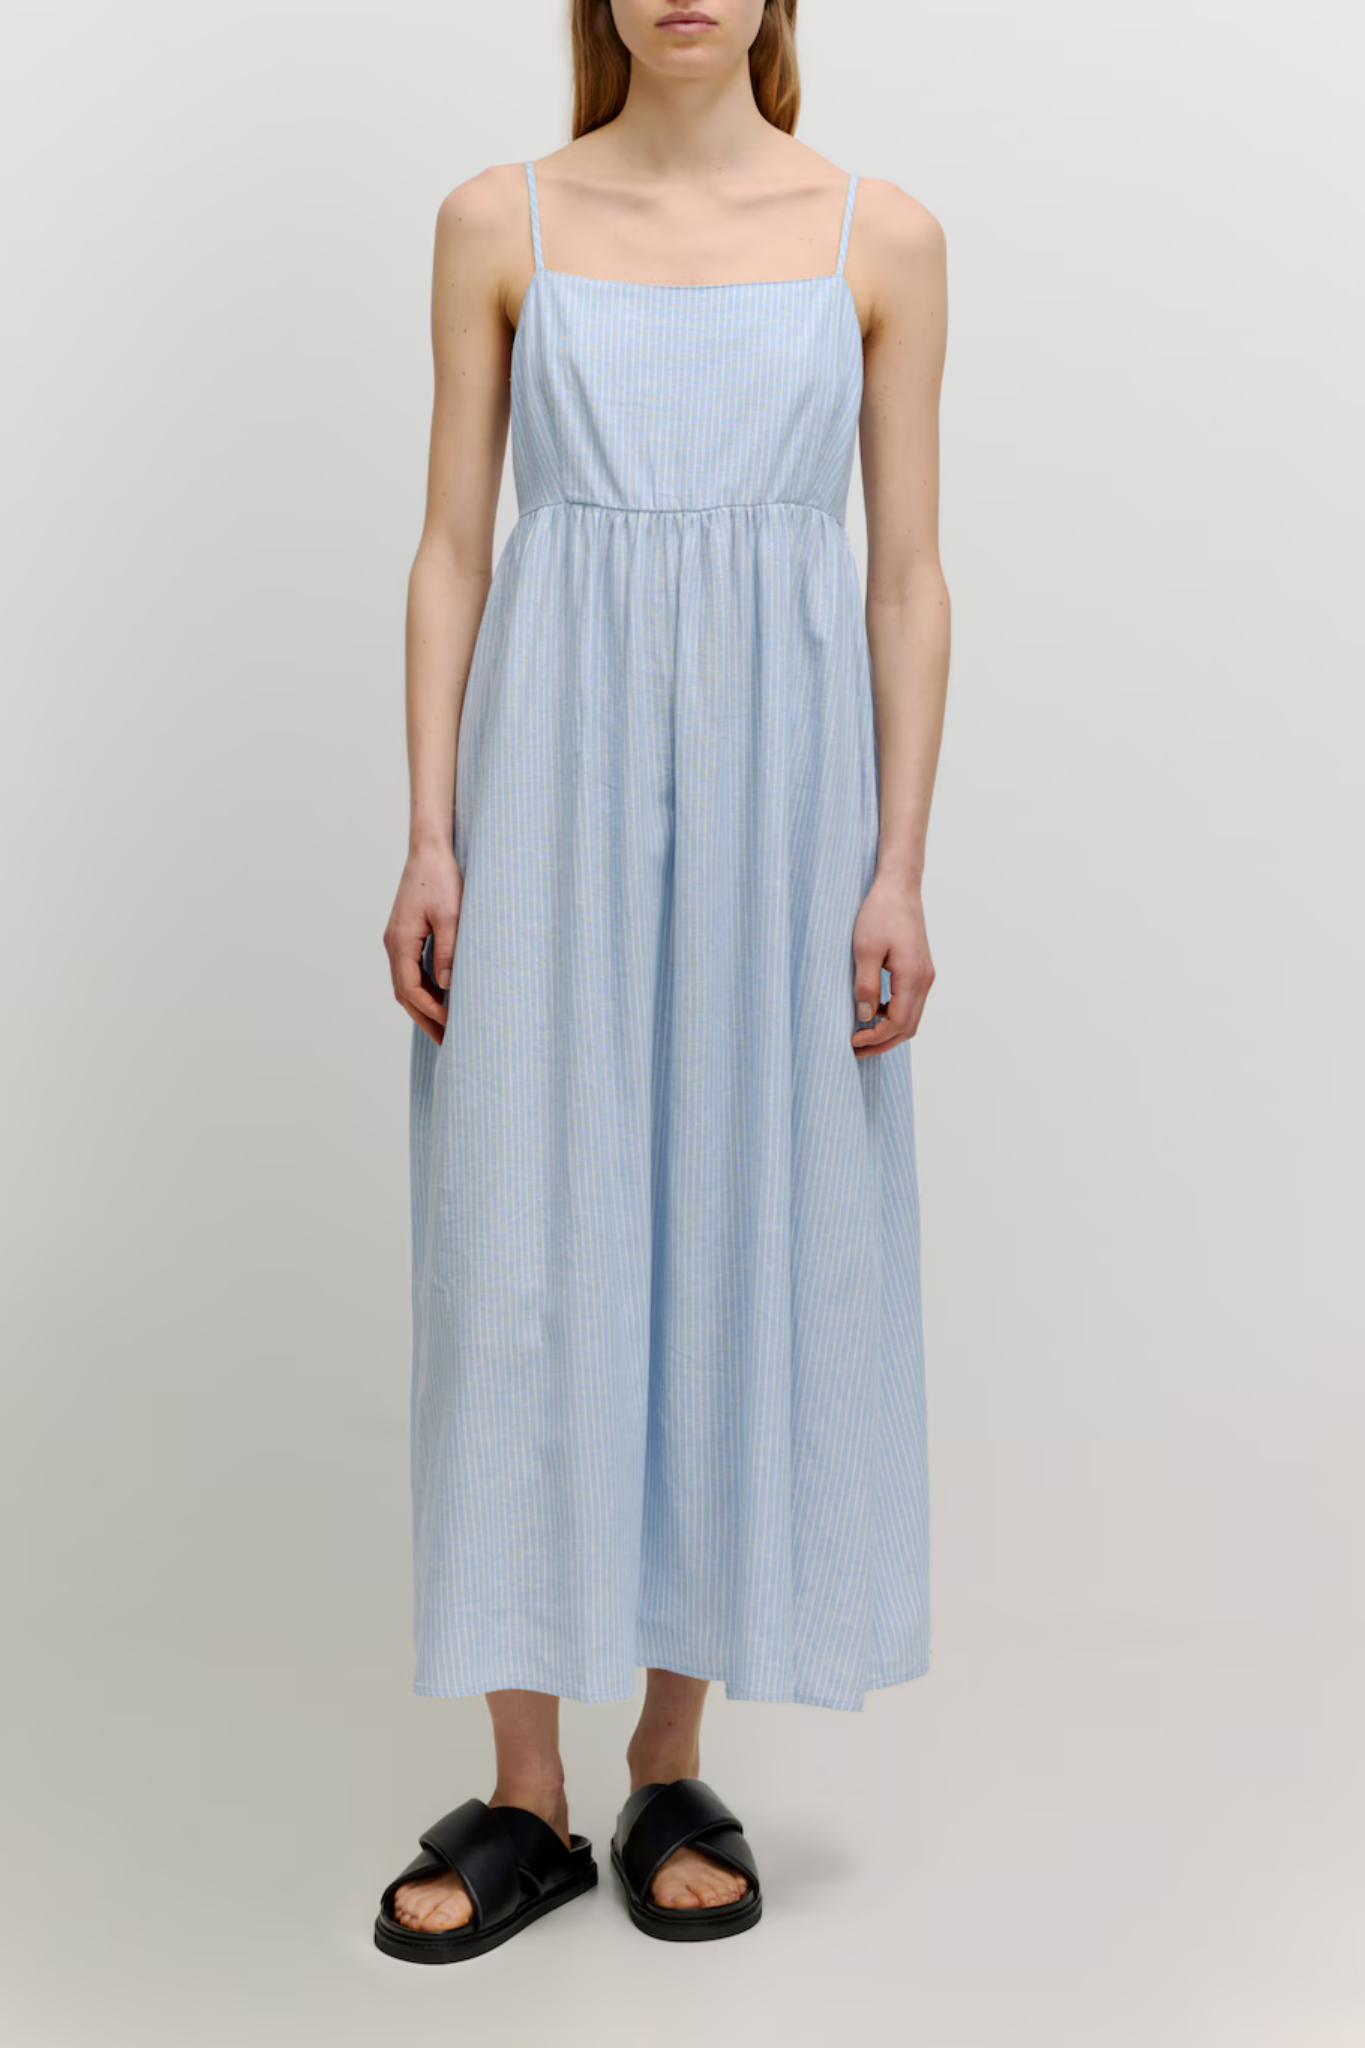 EMMI DRESS - BLUE AND WHITE STRIPE